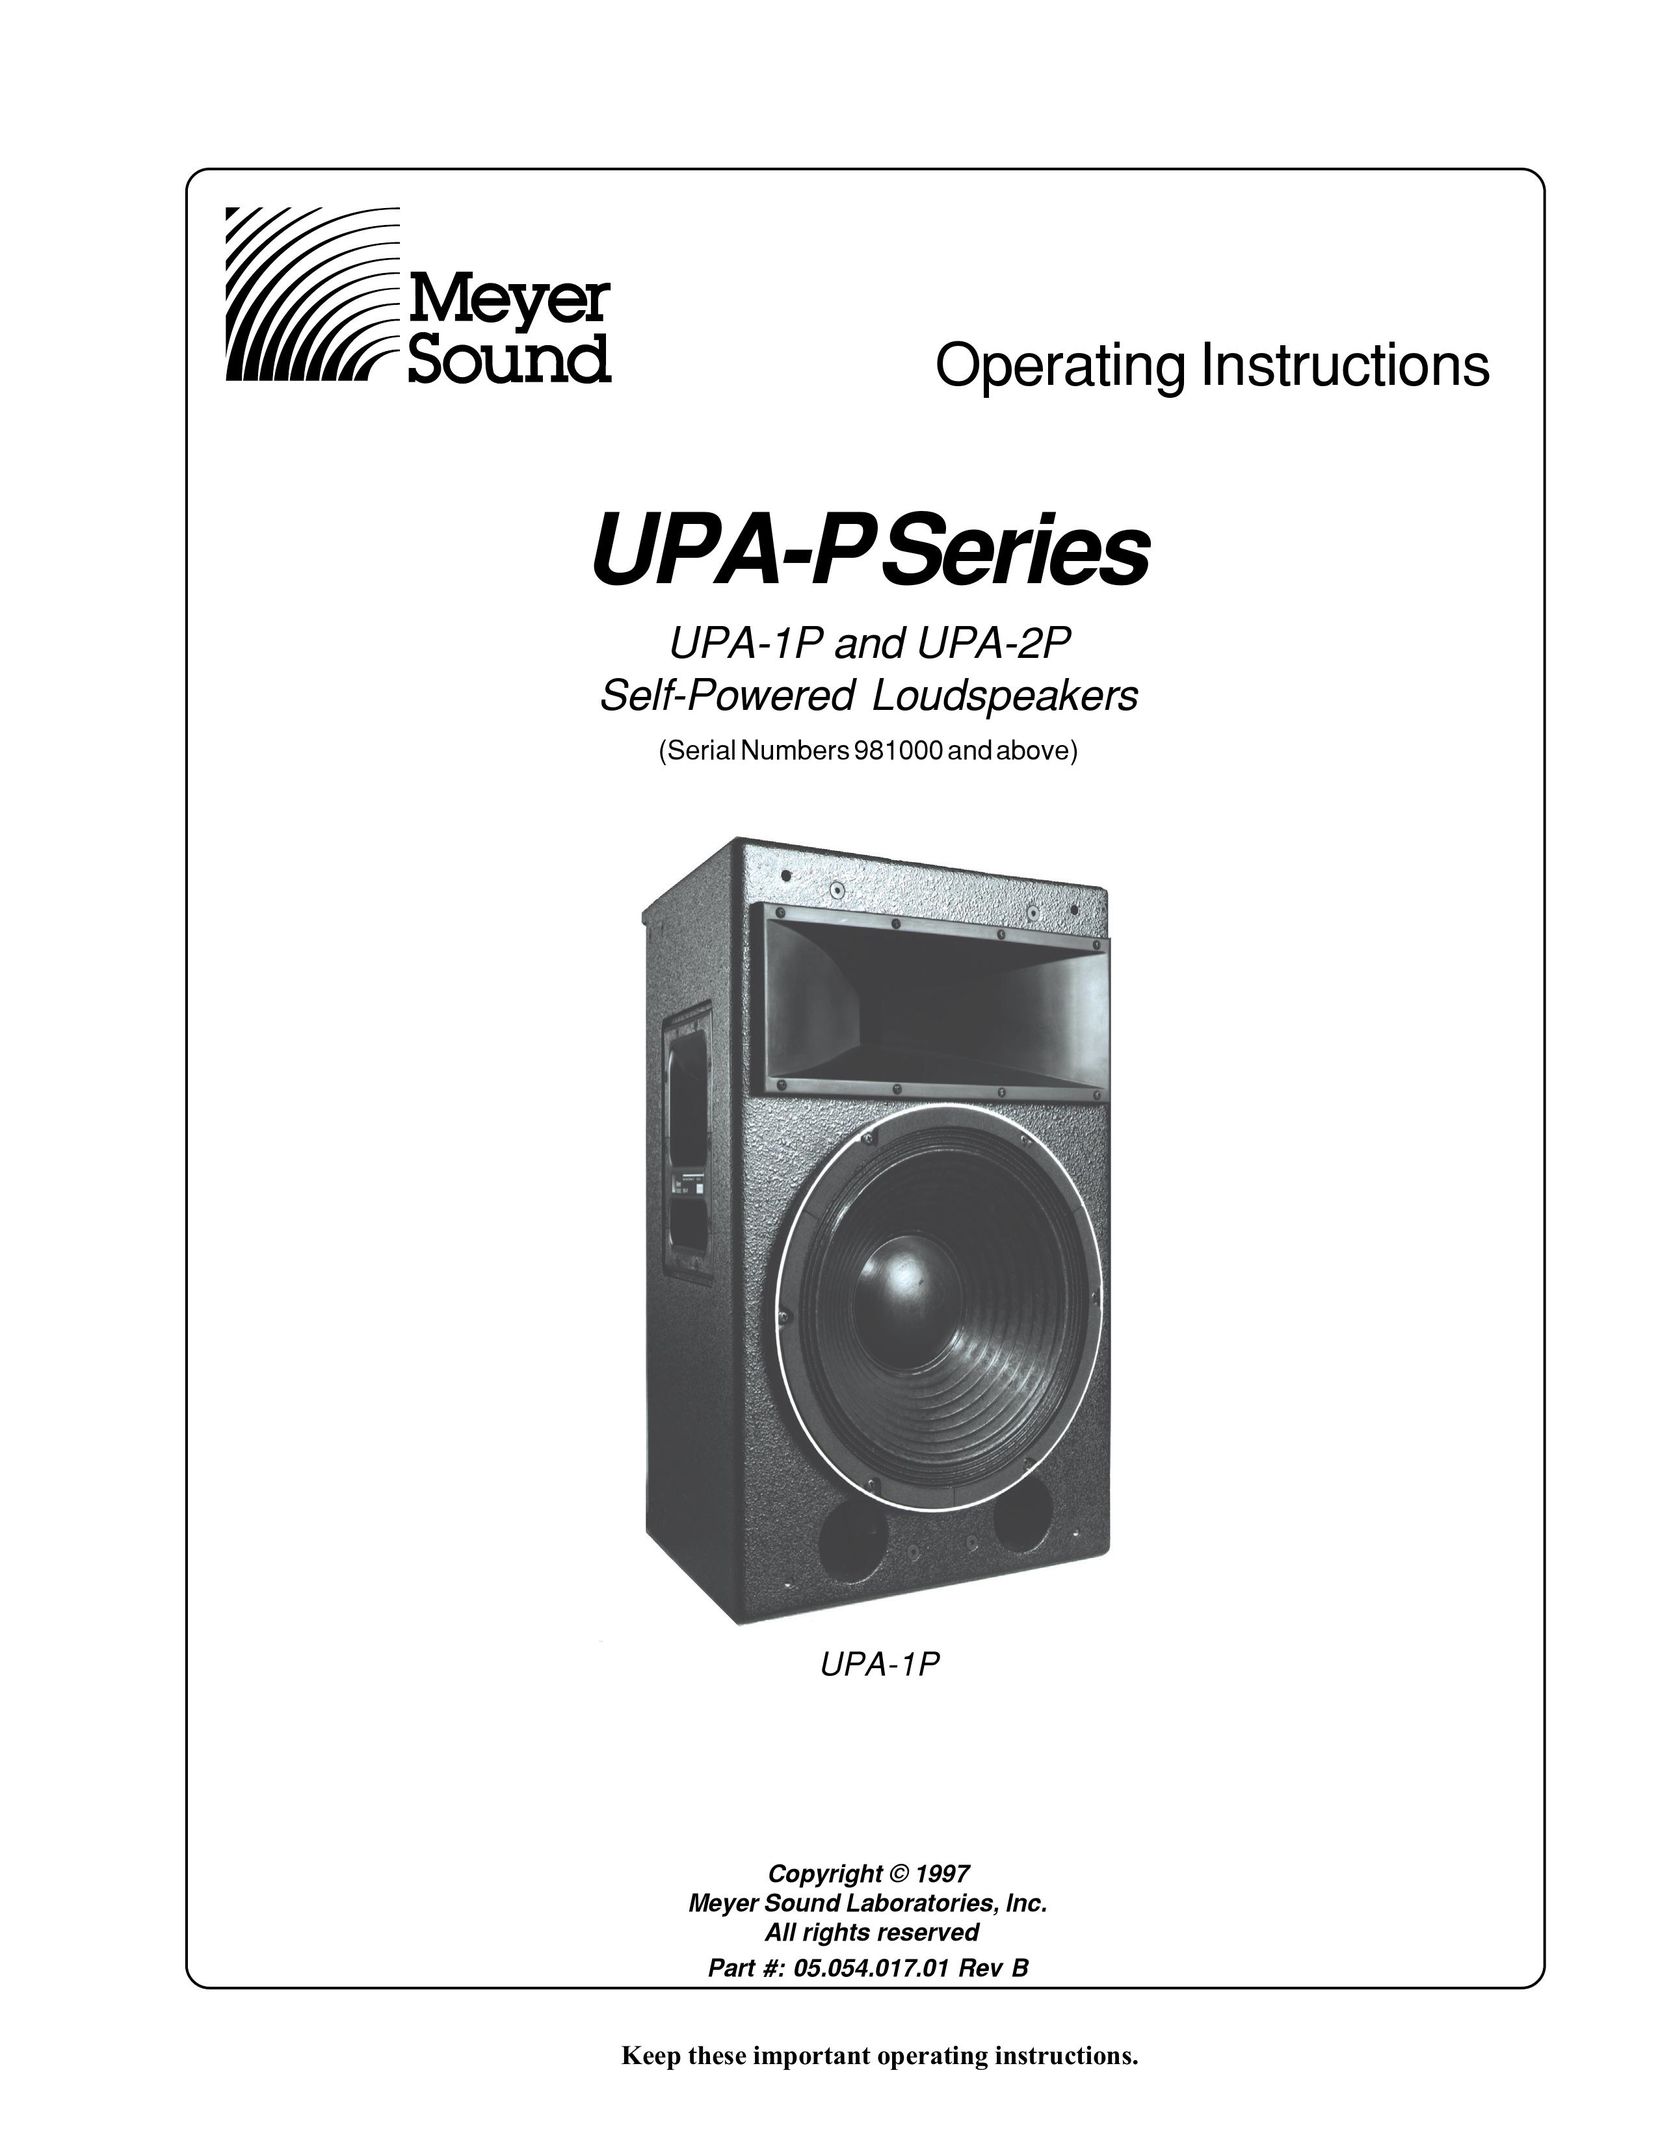 Meyer Sound UPA-1P Portable Speaker User Manual